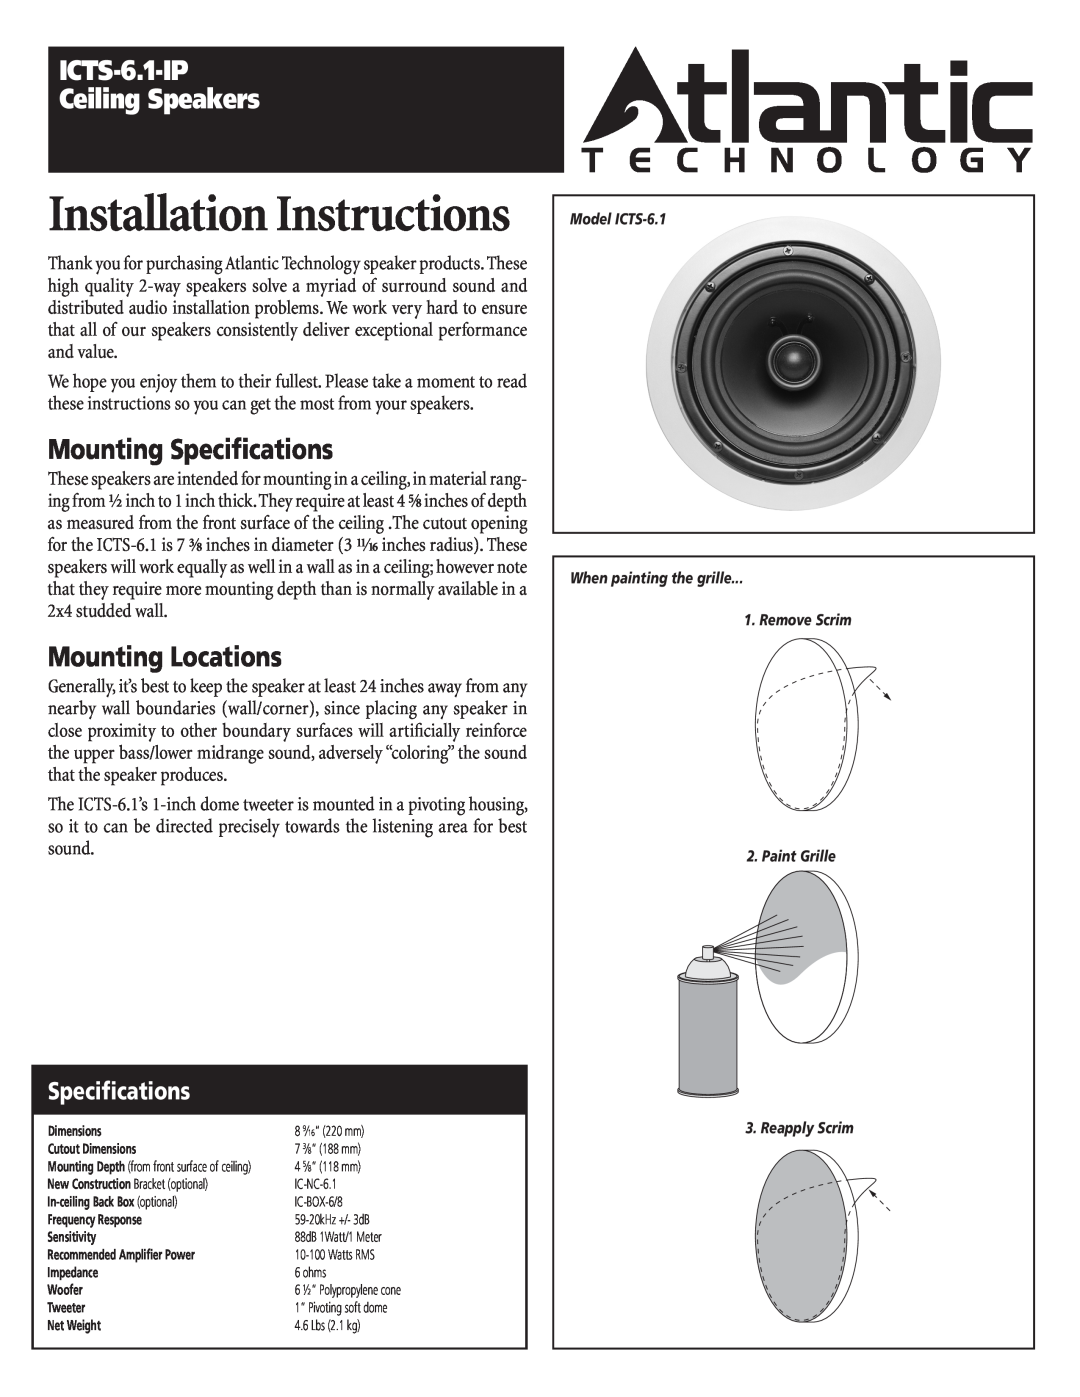 Atlantic Technology installation instructions Installation Instructions, ICTS-6.1-IP Ceiling Speakers, Specifications 